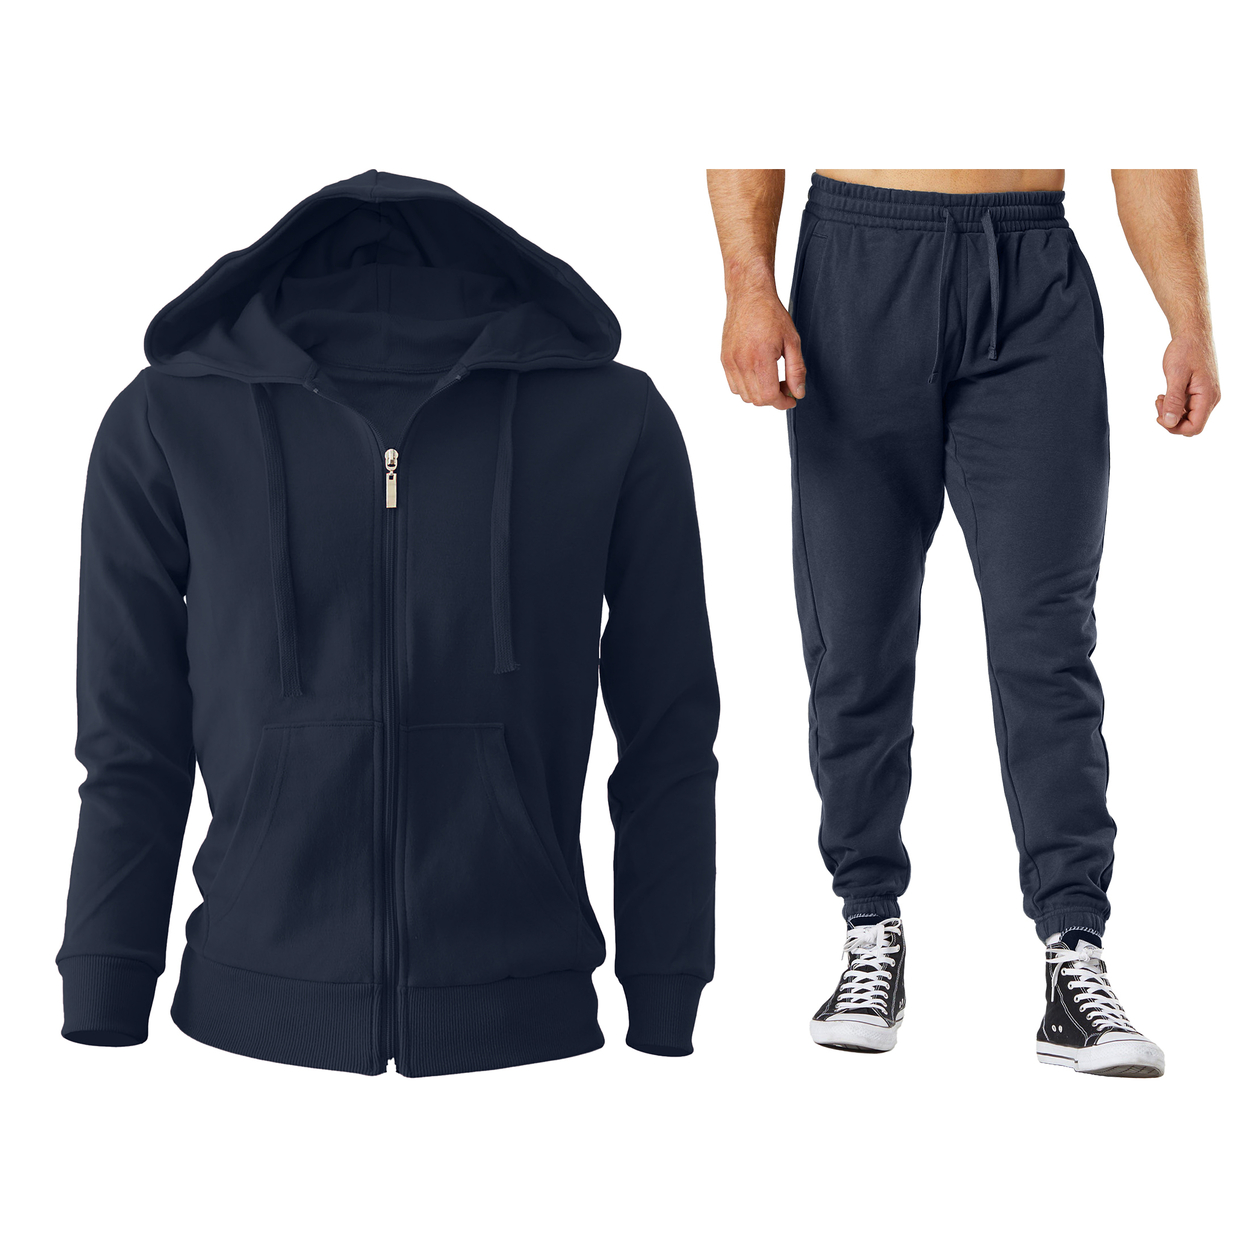 2-Piece: Men's Winter Warm Cozy Athletic Multi-Pockets BIG & TALL Sweatsuit Set - Navy, 3xl